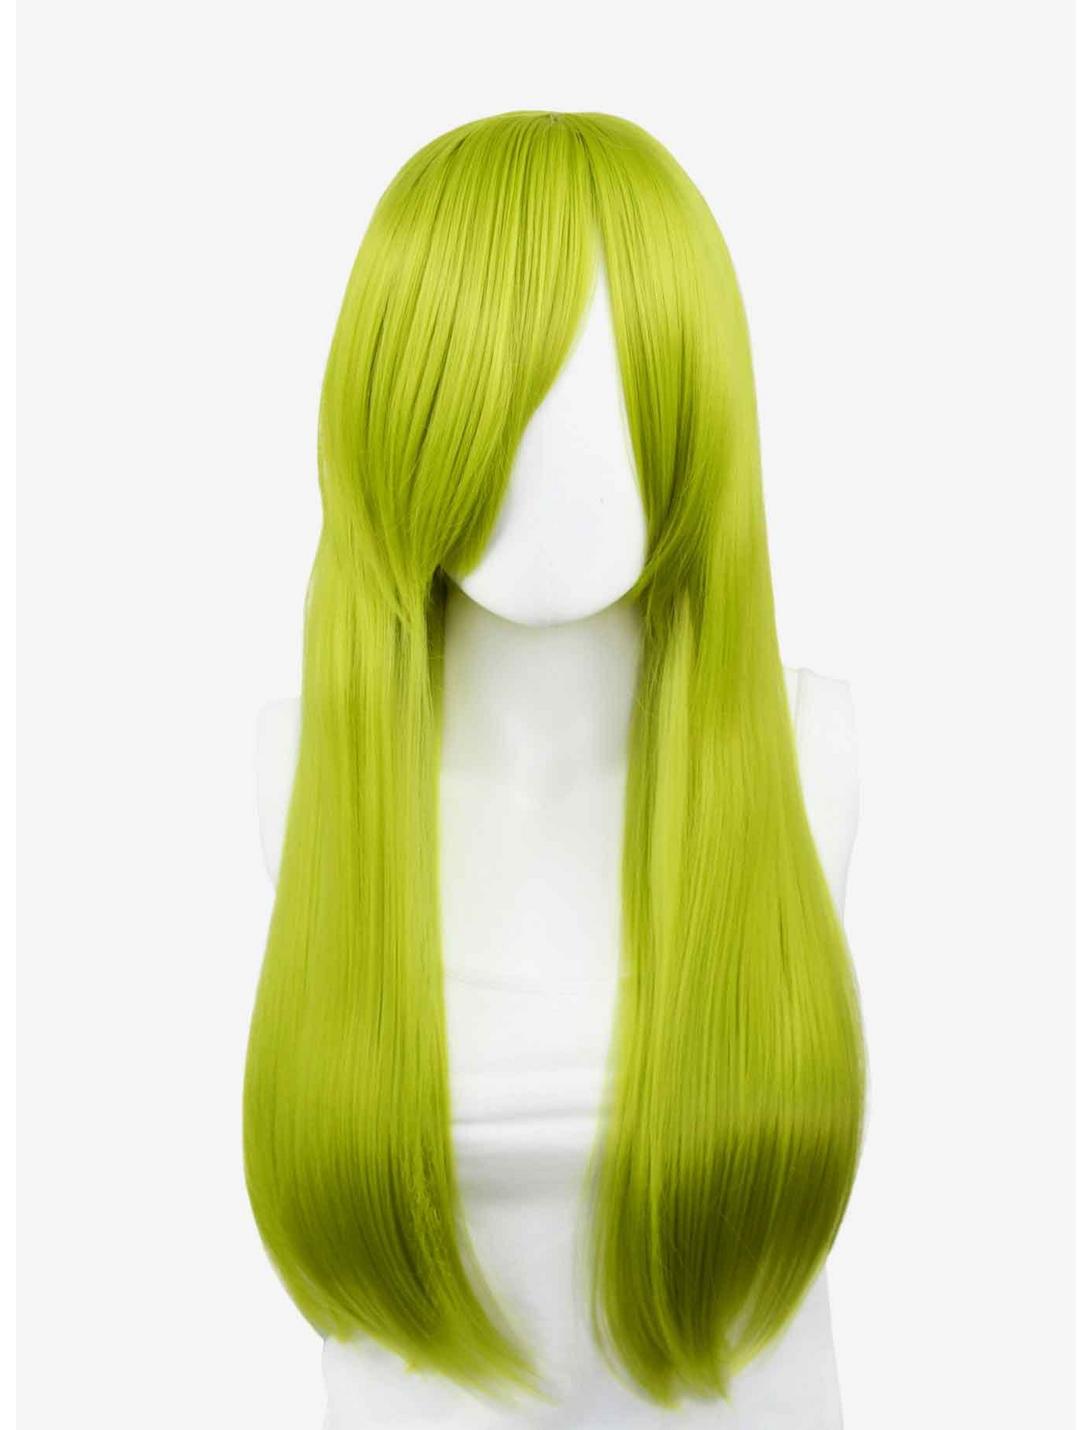 Epic Cosplay Nyx Tea Green Long Straight Wig, , hi-res